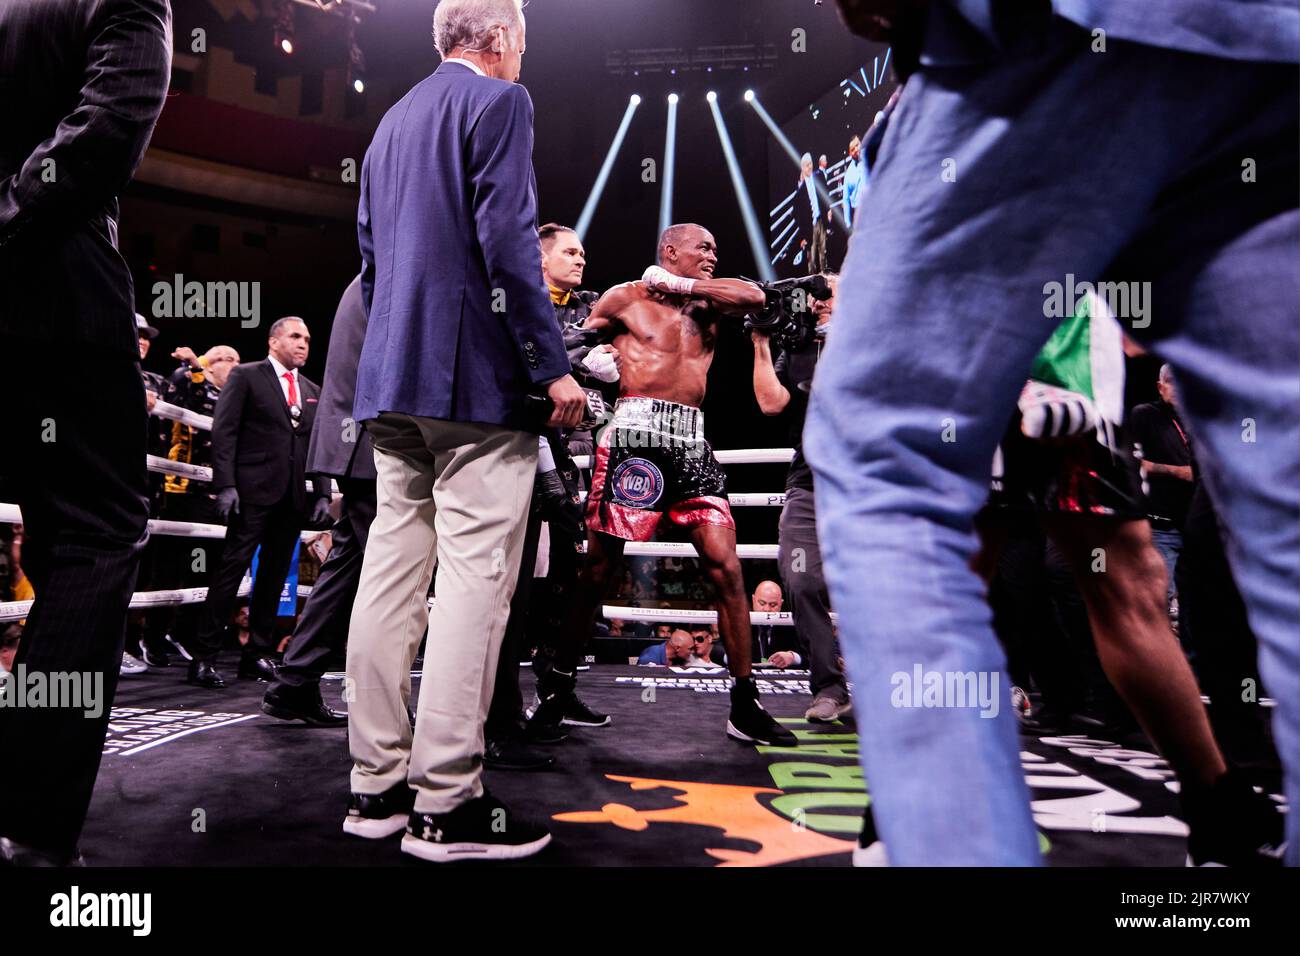 Professional boxer WBA interim super-lightweight Alberto Puello defeats WBA Super-Lightweight Batyr Akhmedov in Professional Boxing match Stock Photo